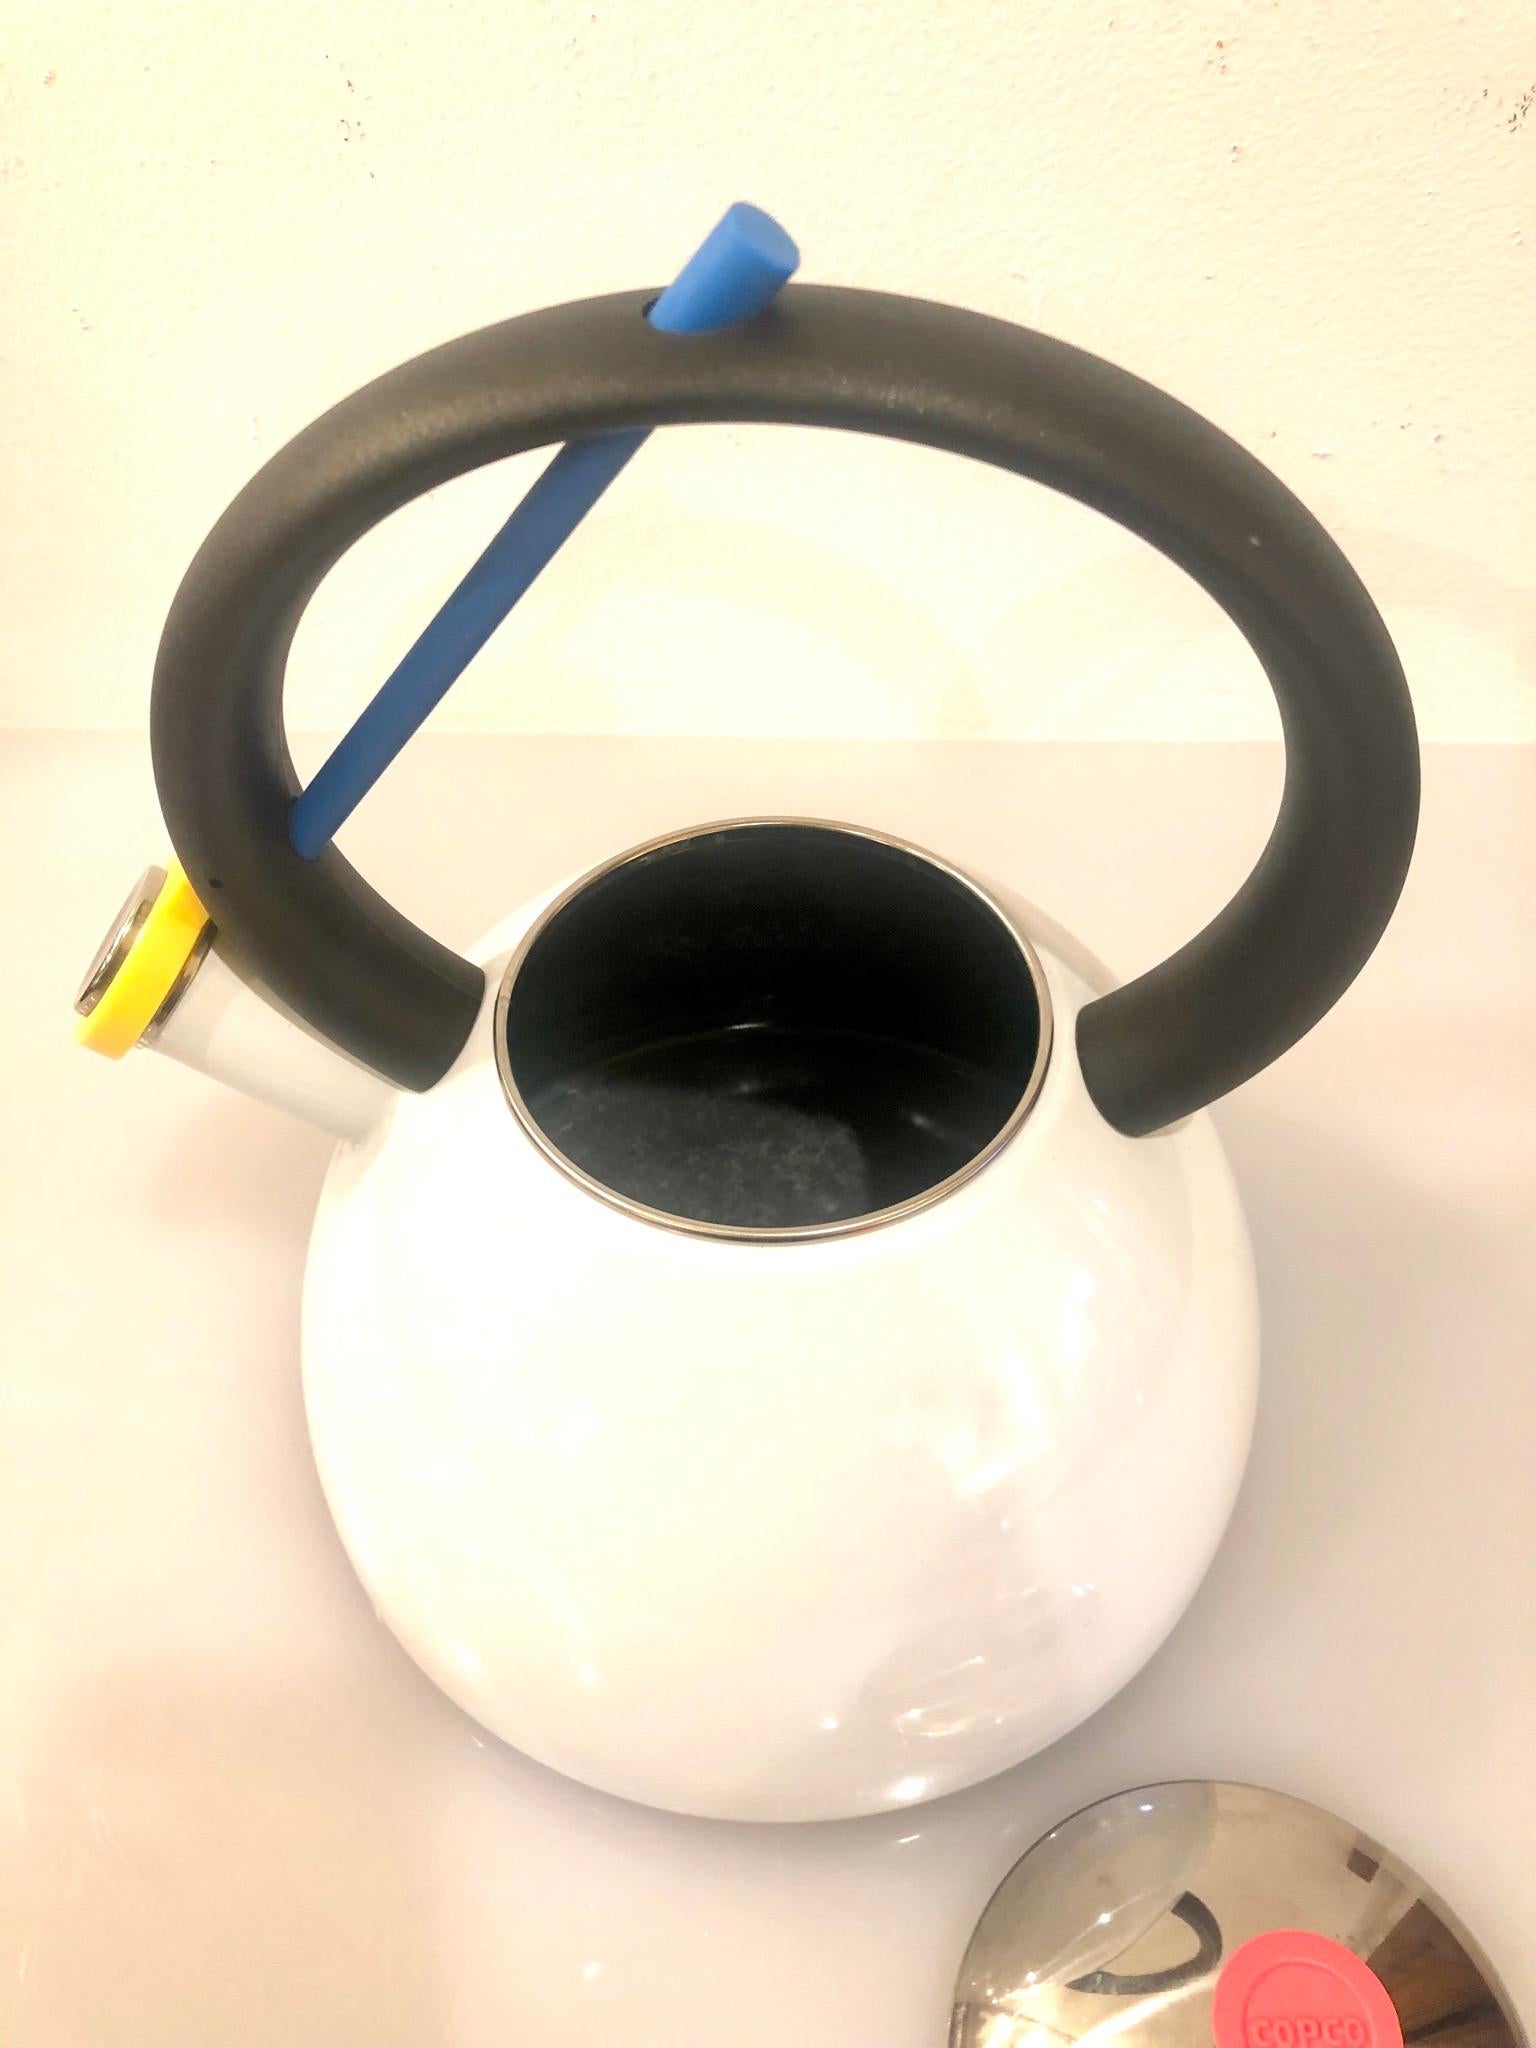 copco tea kettle